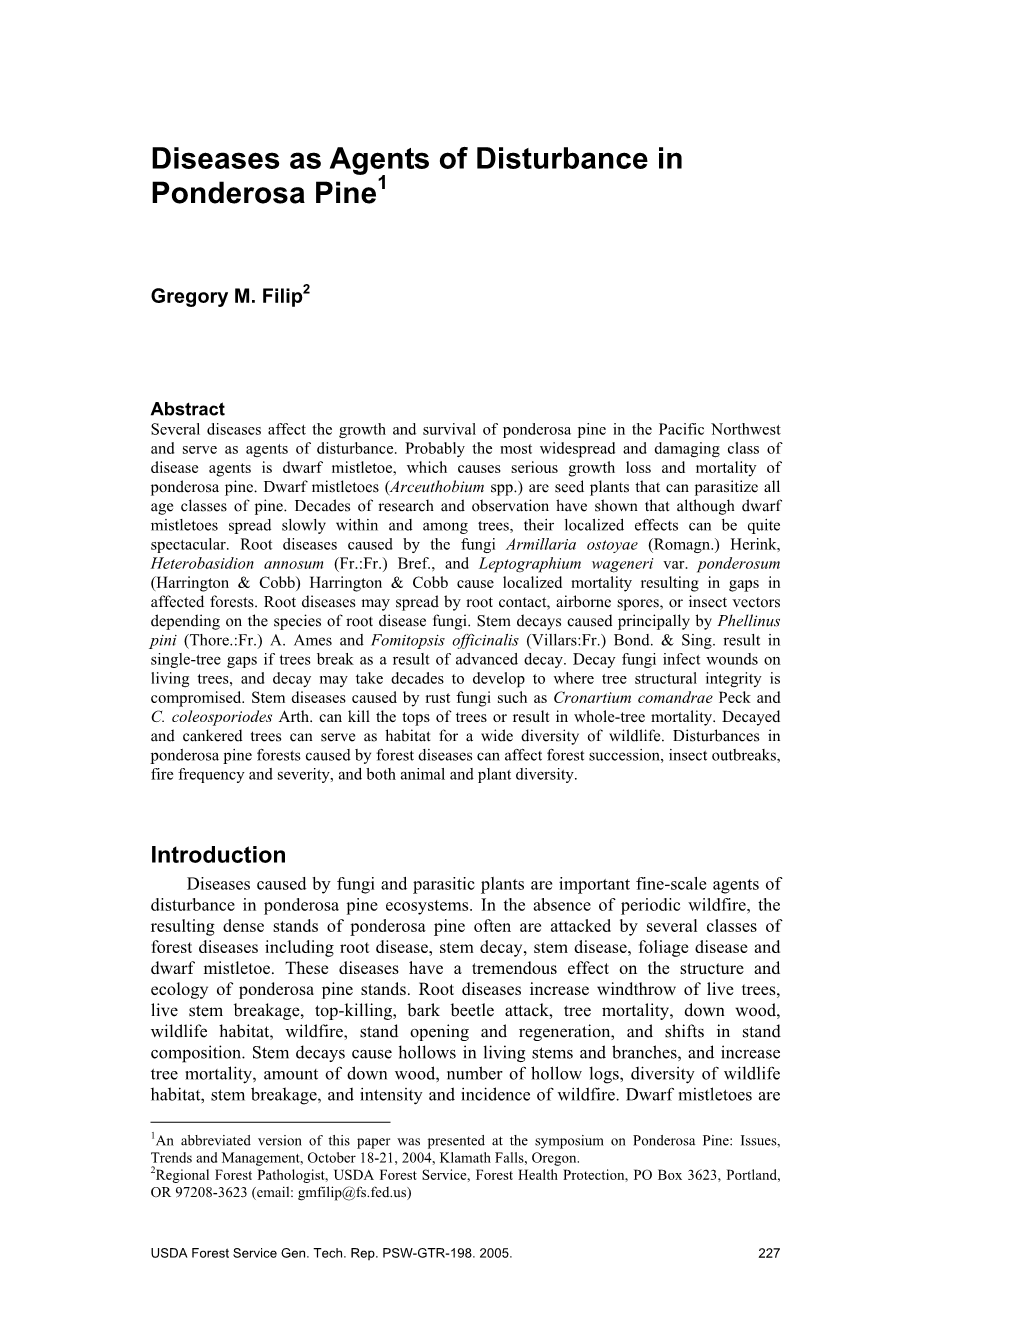 Diseases As Agents of Disturbance in Ponderosa Pine1